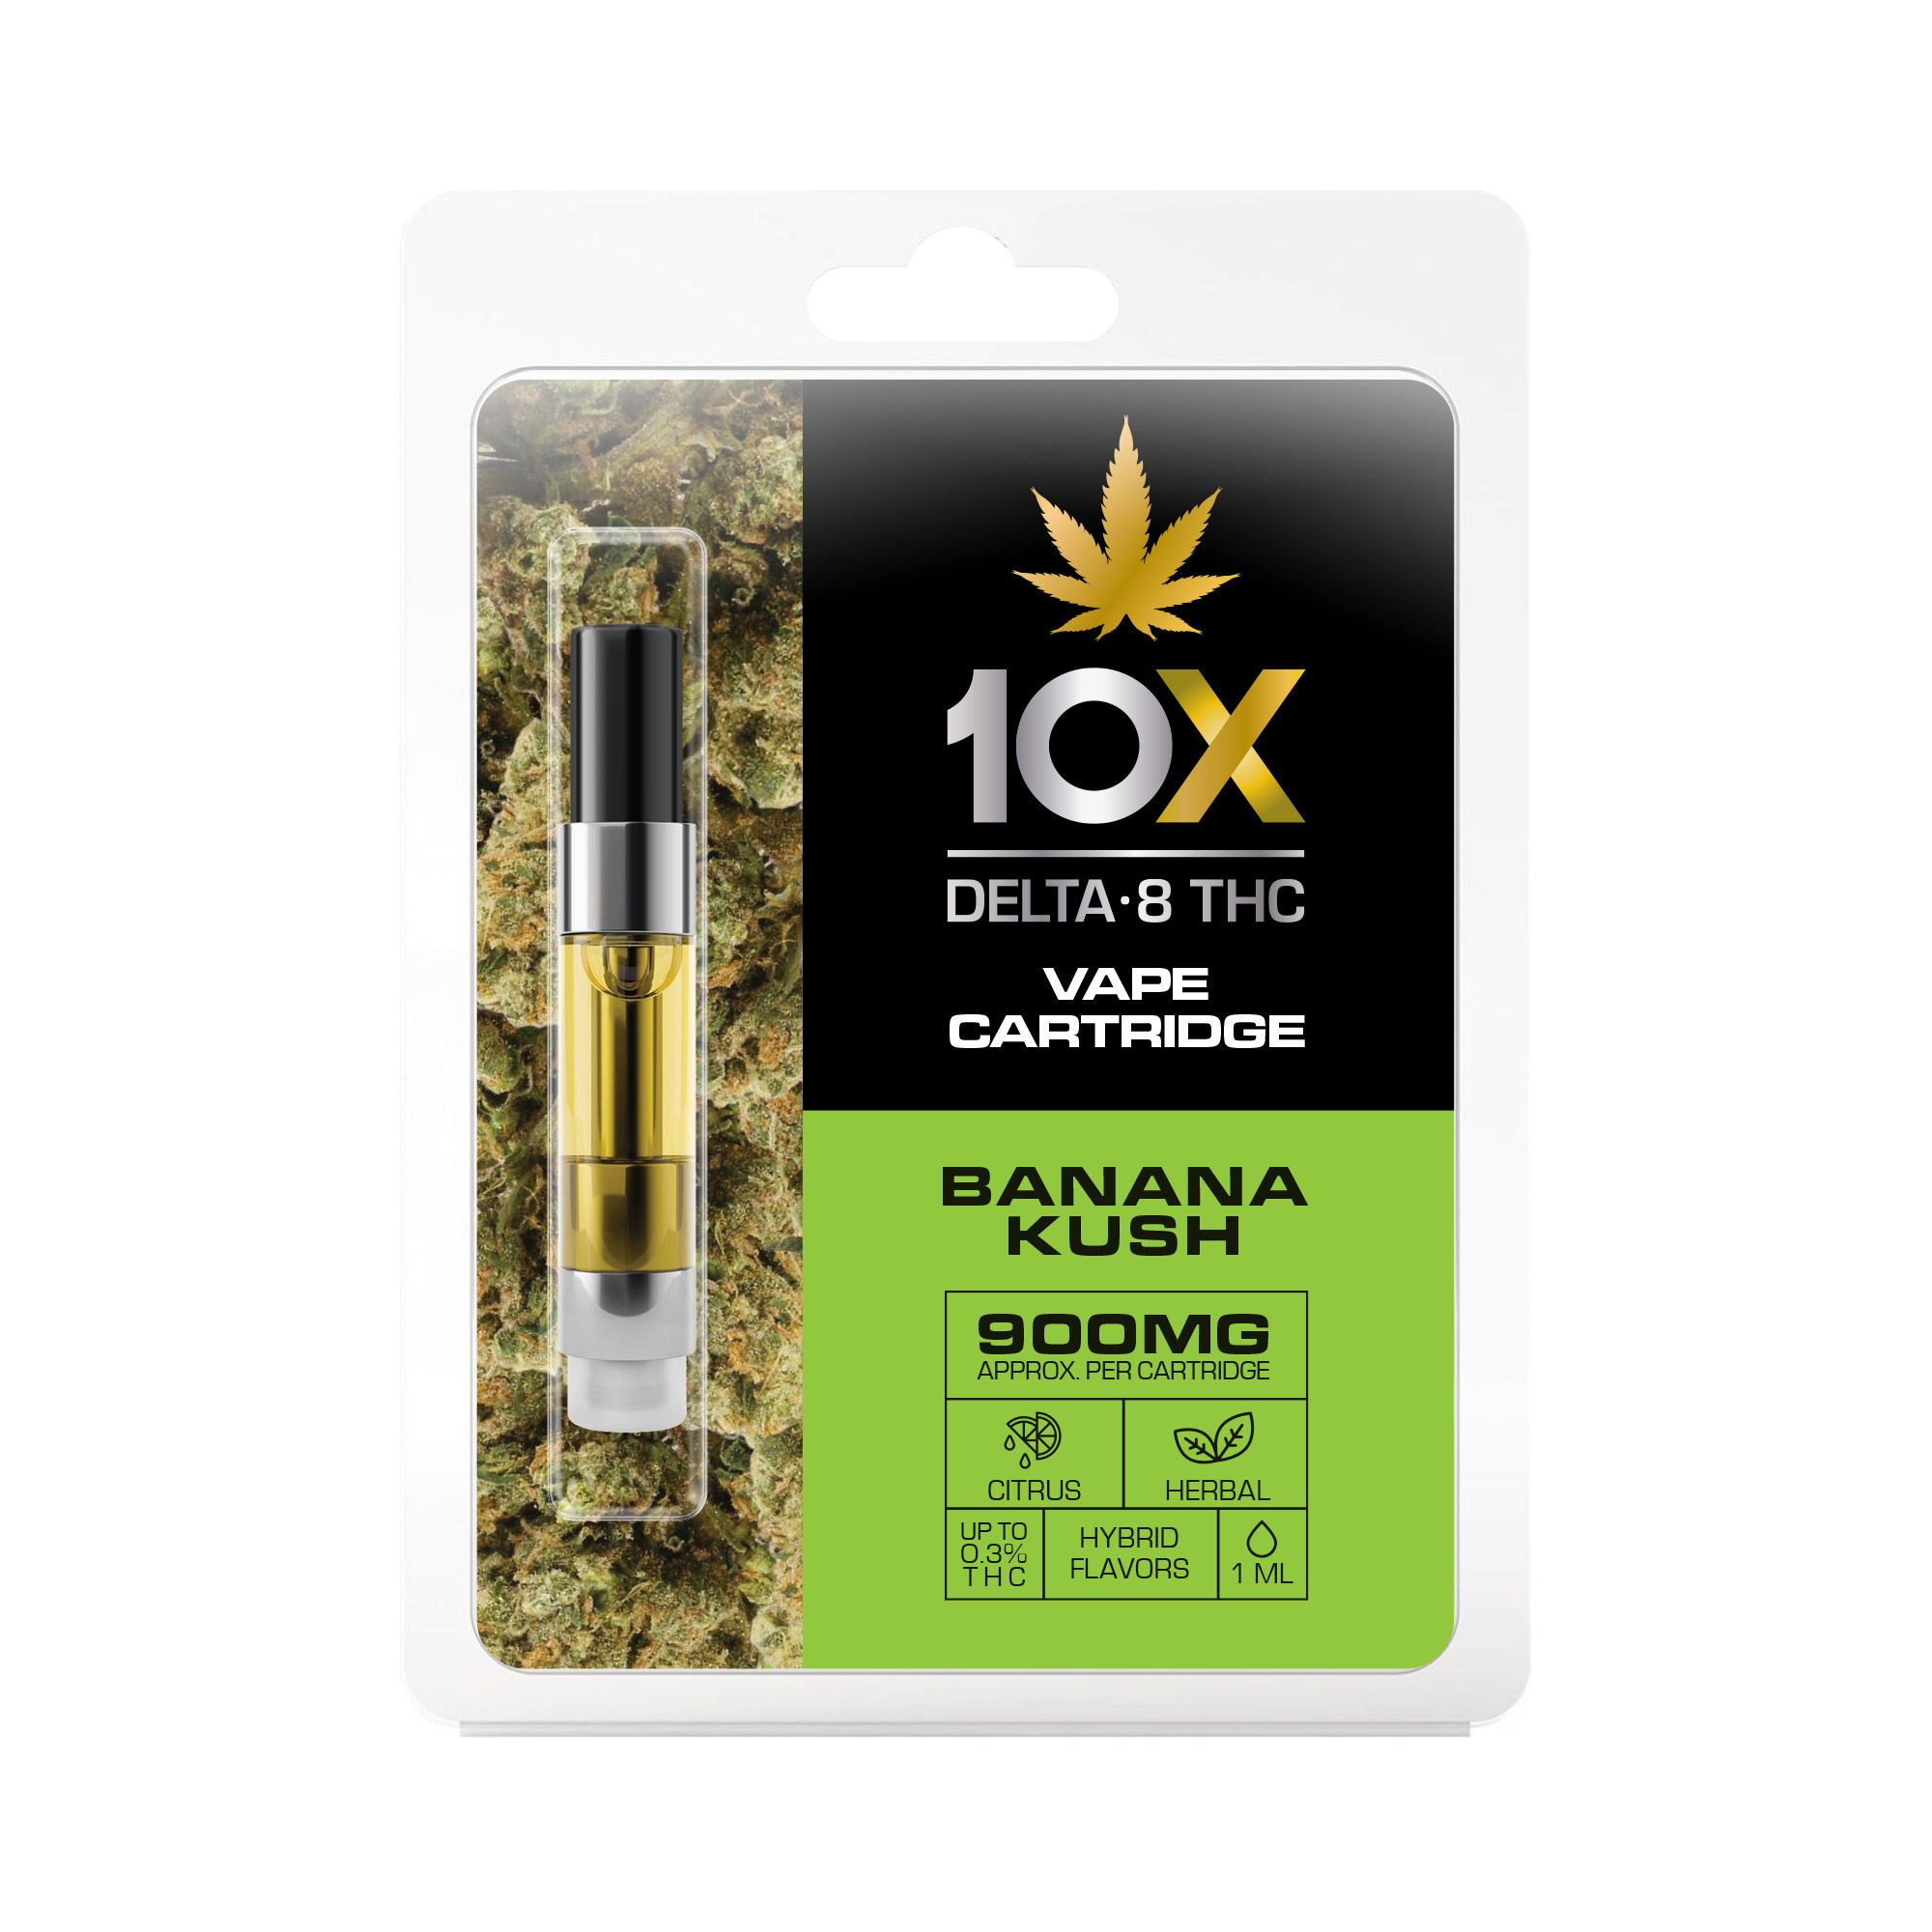 10X Delta-8 THC - Banana Kush Vape Cartridge - 900mg (1ml) - Diamond CBD